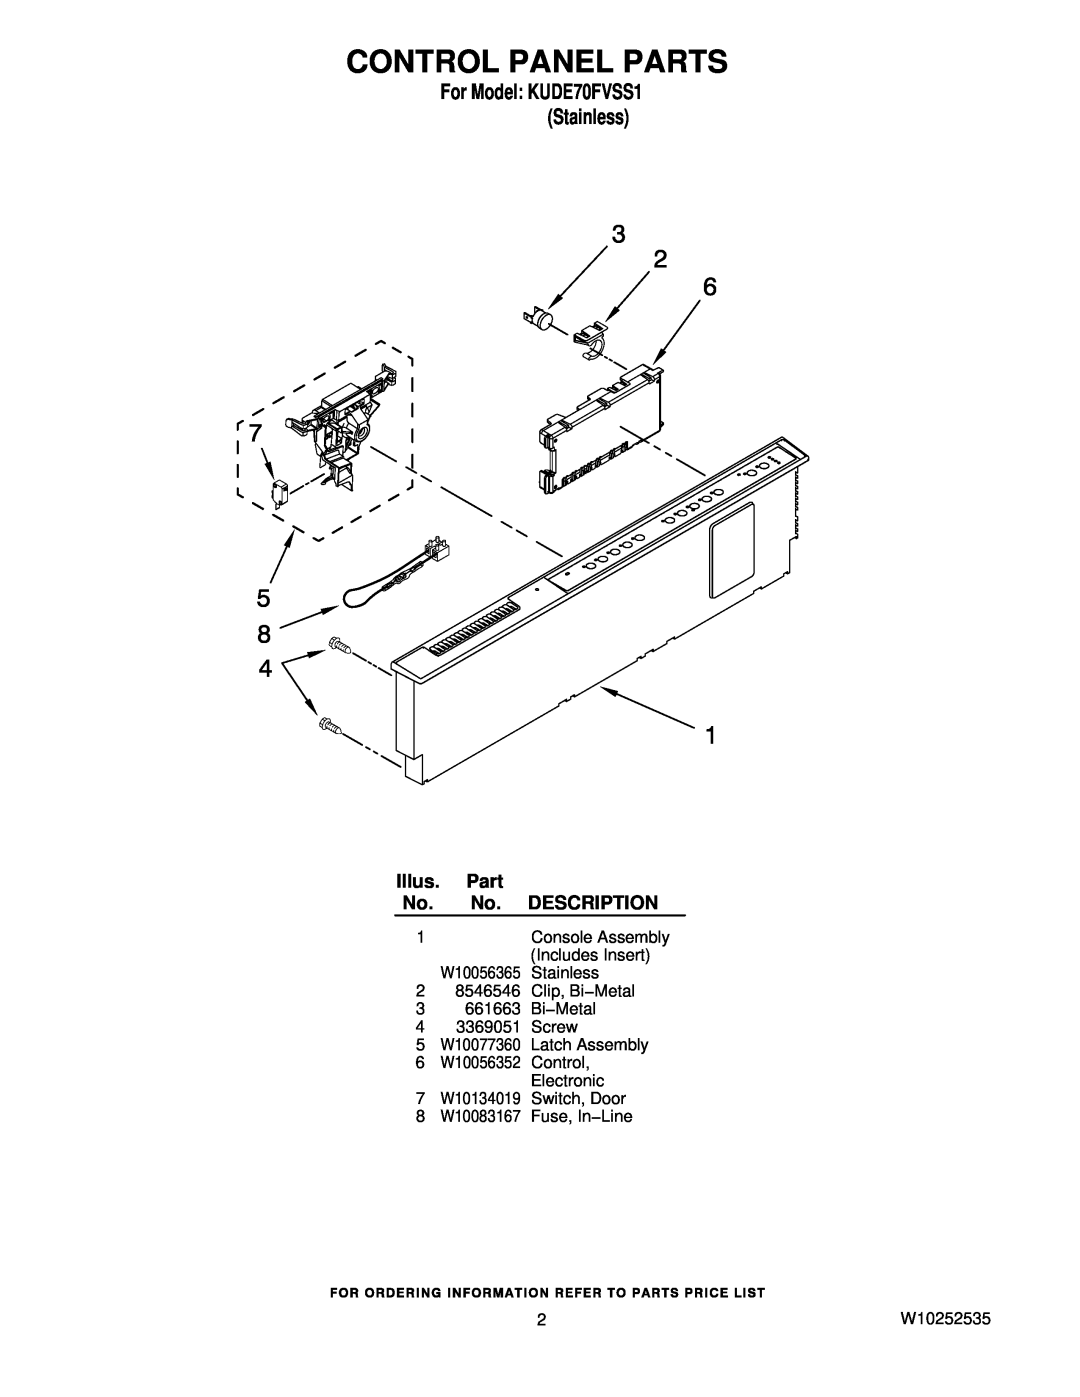 KitchenAid KUDE70FVSS1 Control Panel Parts, Illus, Description, Console Assembly, Includes Insert, Stainless, W10056365 